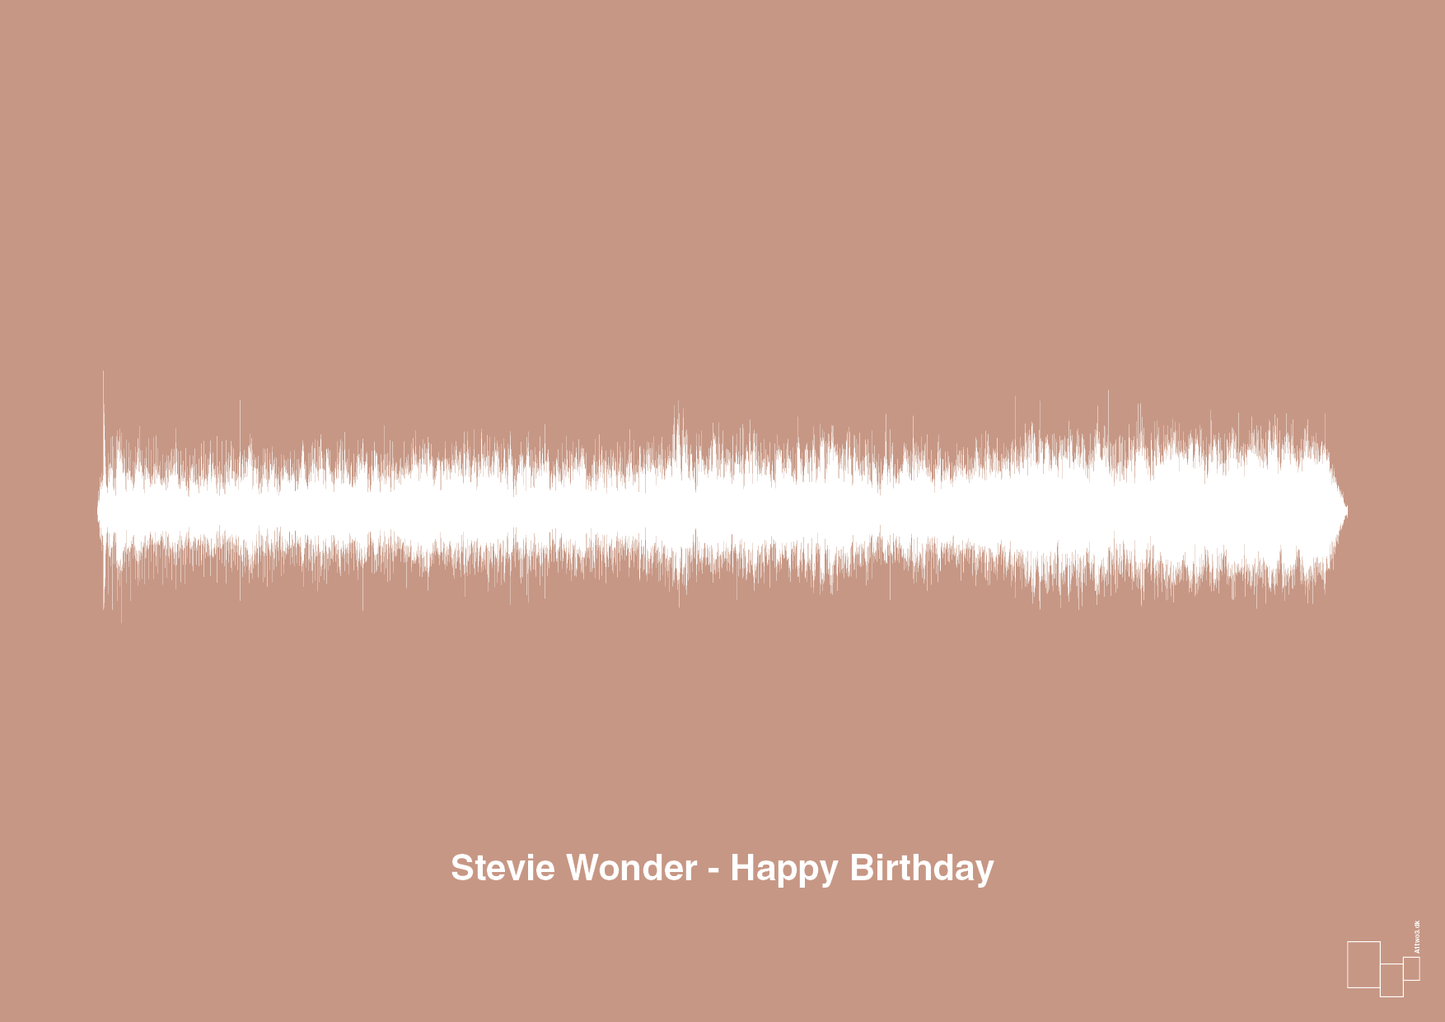 stevie wonder - happy birthday - Plakat med Musik i Powder